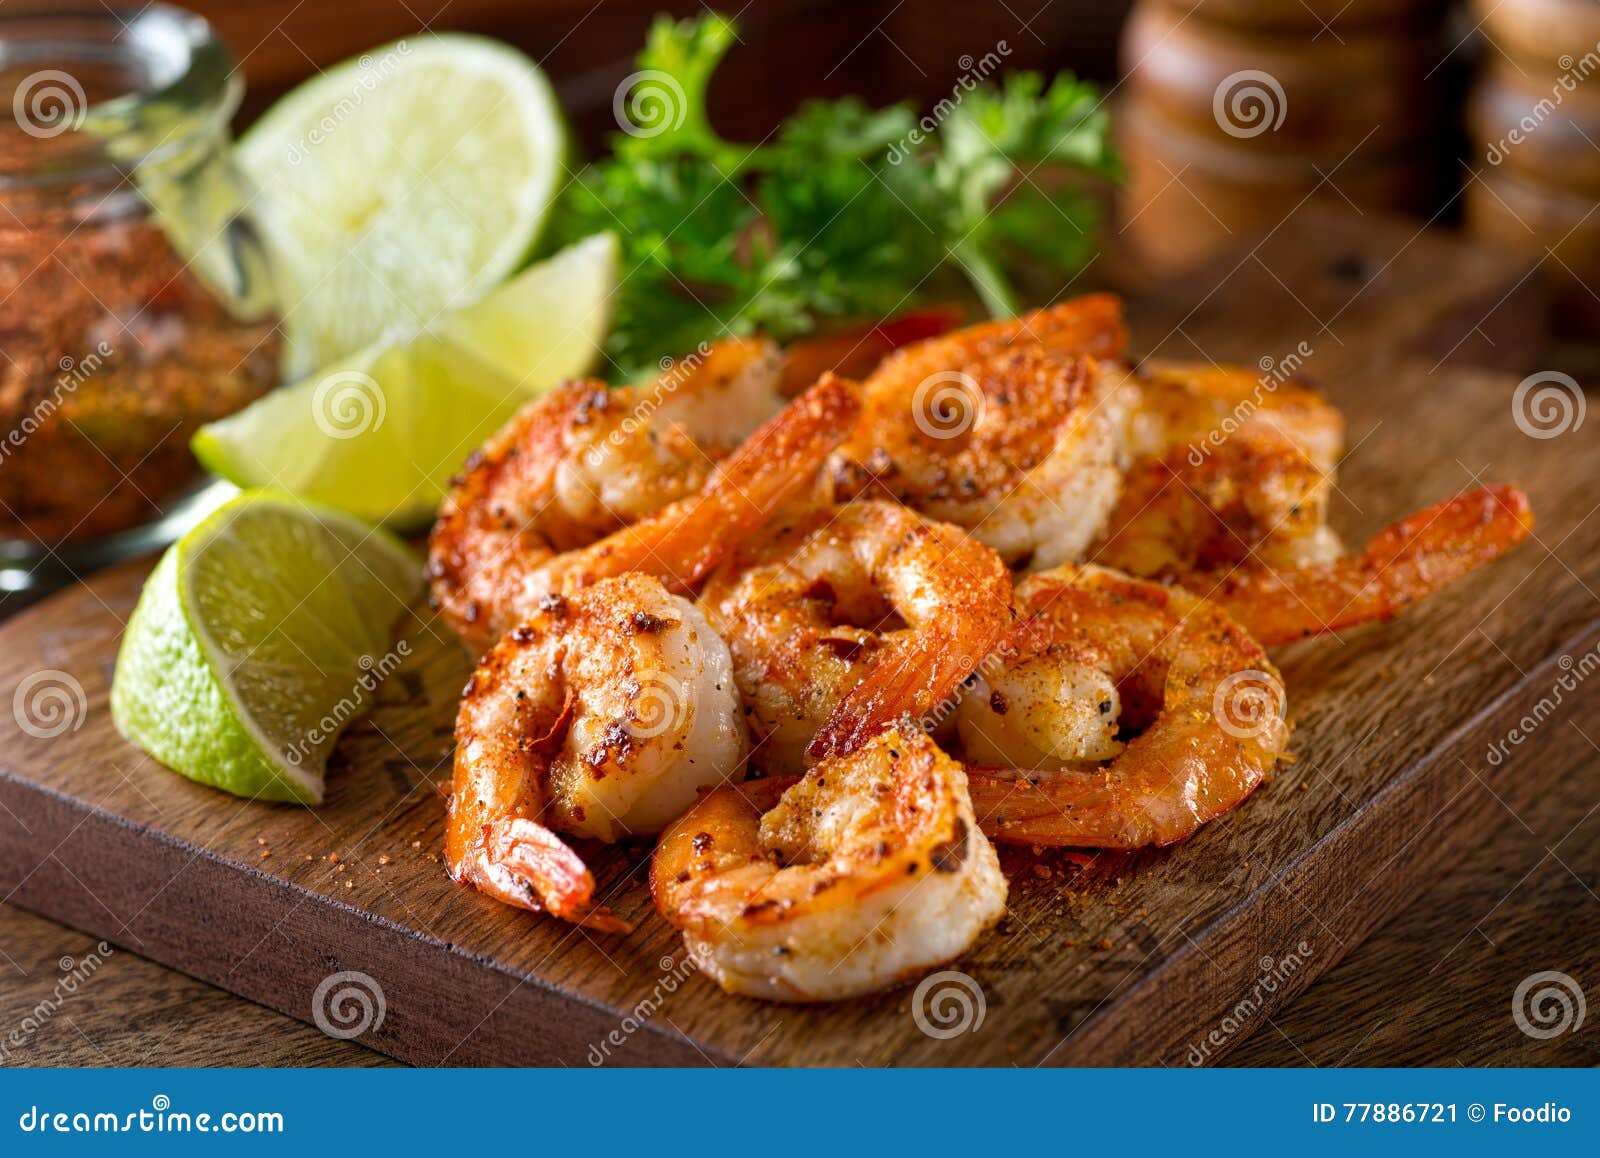 cajun shrimp